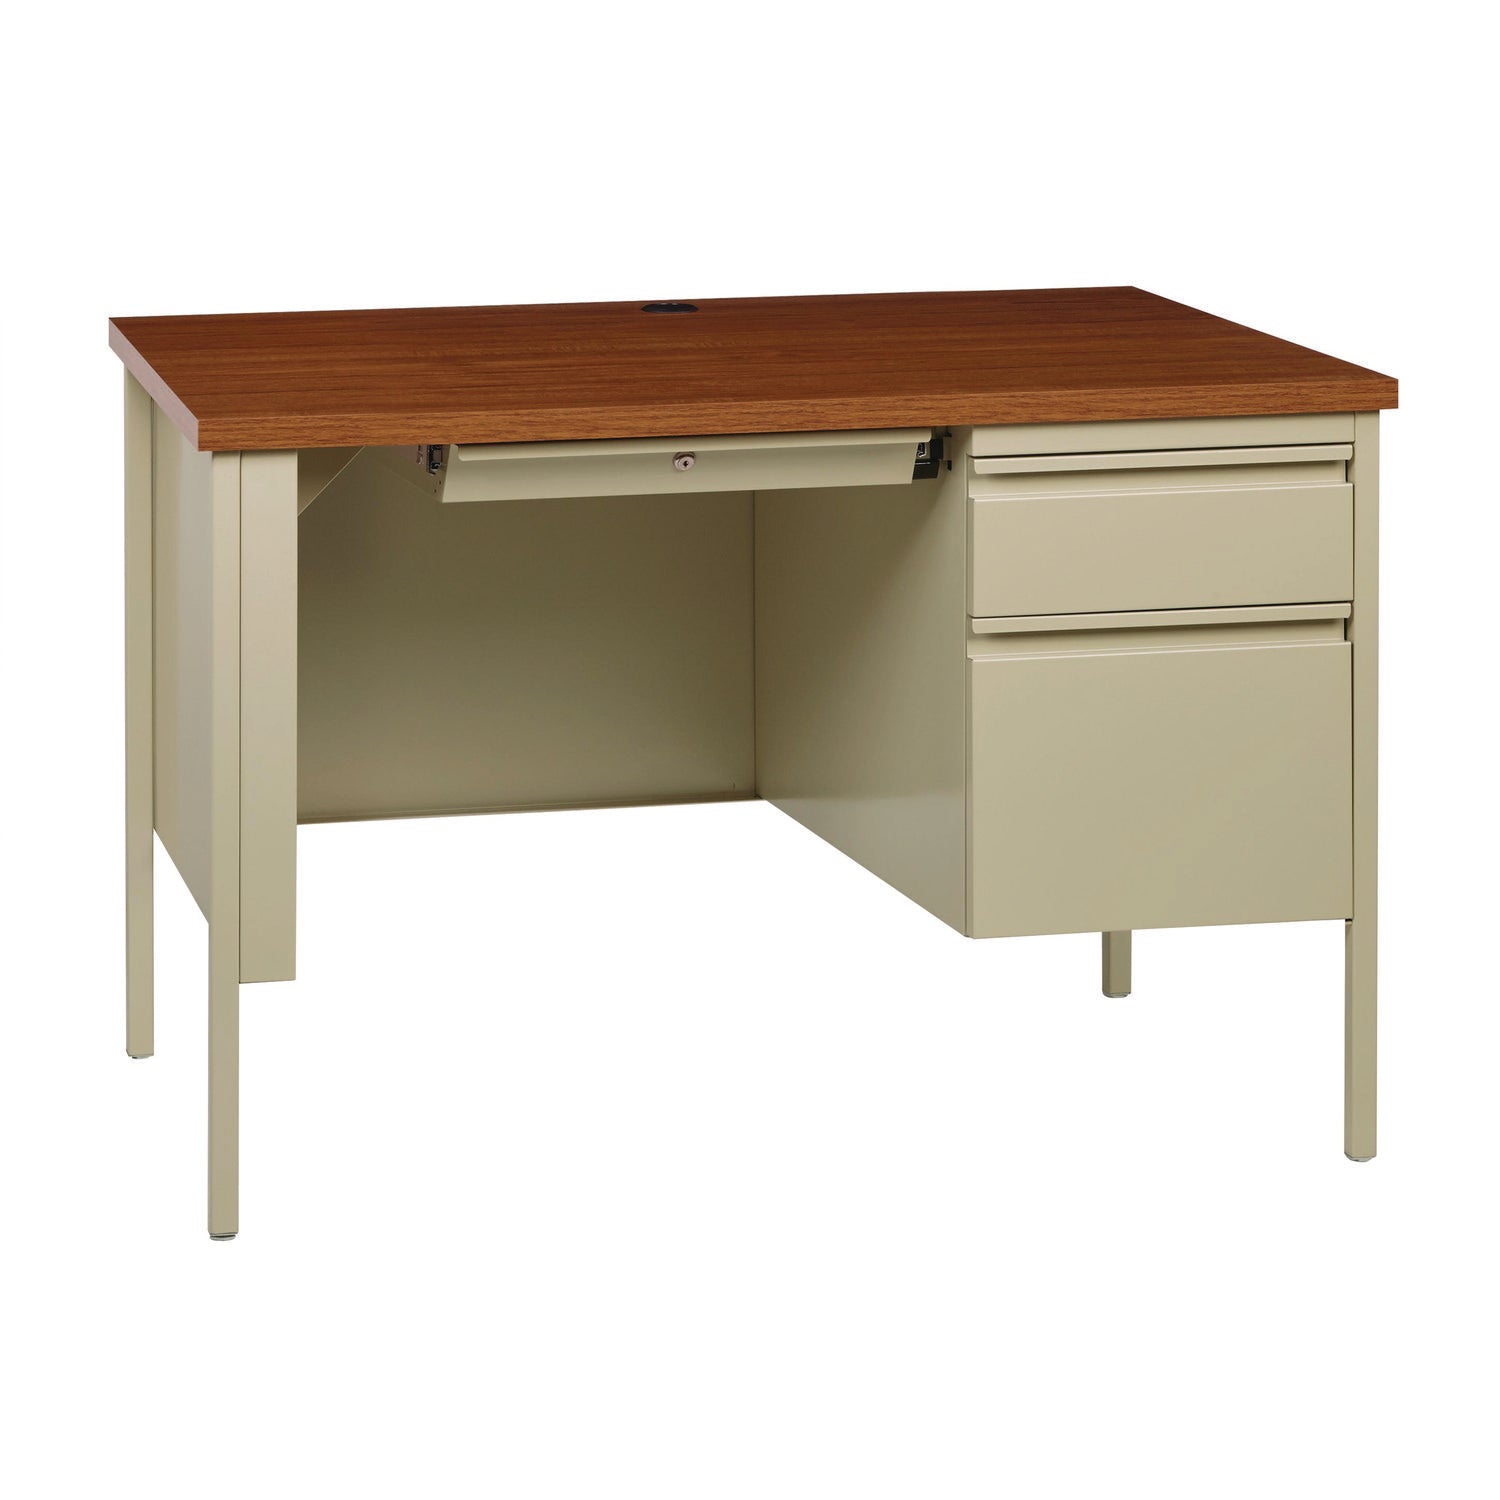 single-pedestal-steel-desk-45-x-24-x-295-cherry-putty_alehsd4524pc - 4